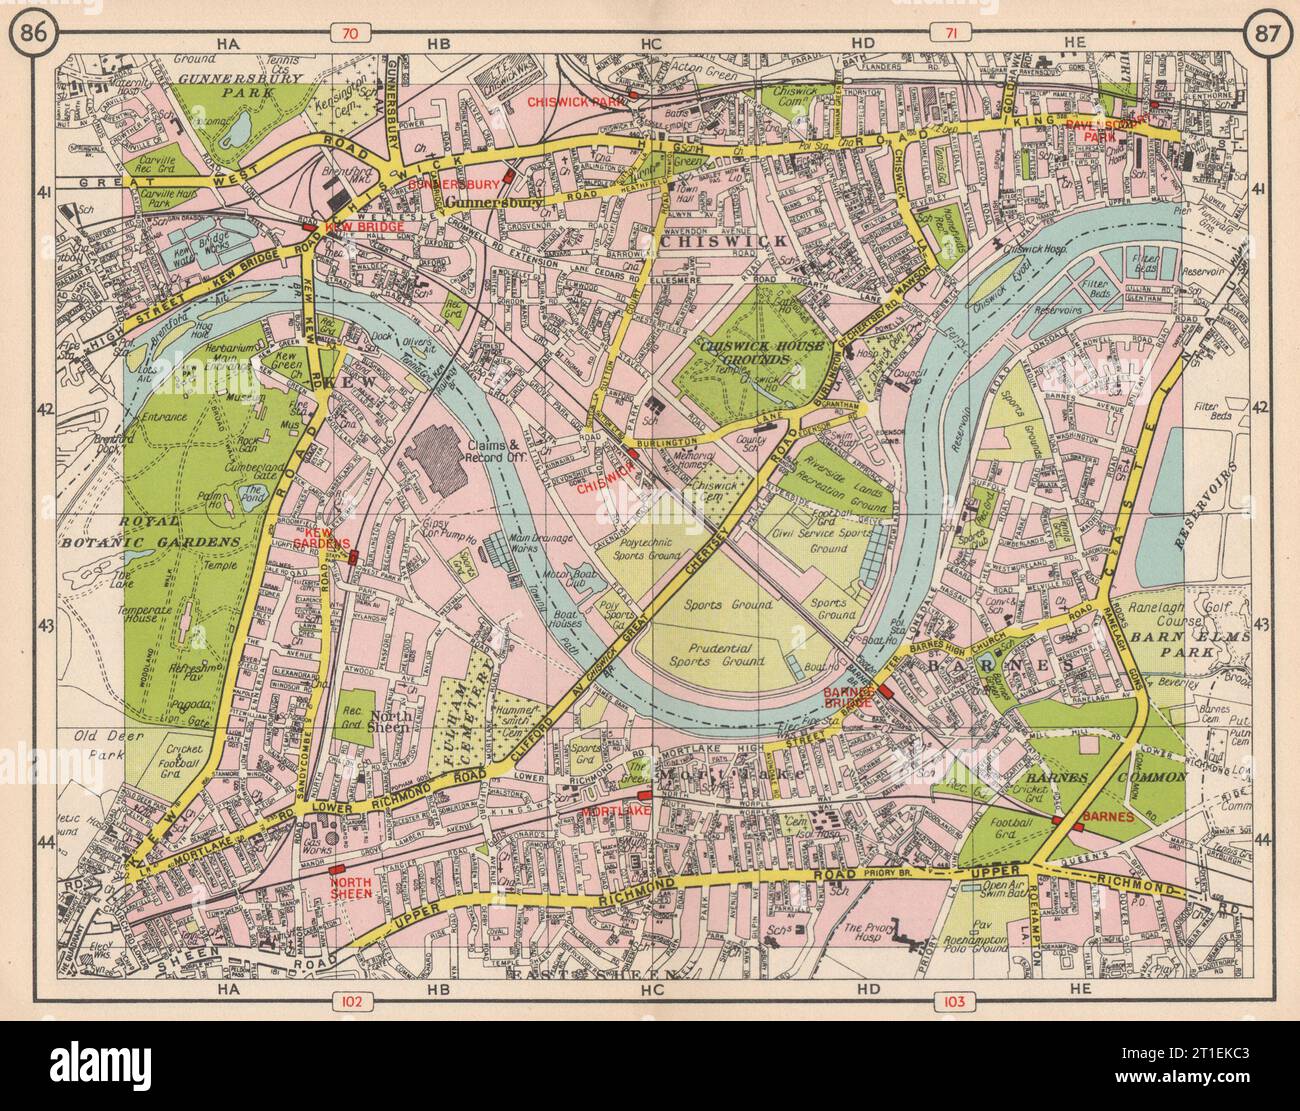 SW LONDON. Chiswick Gunnerbsury Kew Mortlake Barnes North Sheen 1953 old map Stock Photo